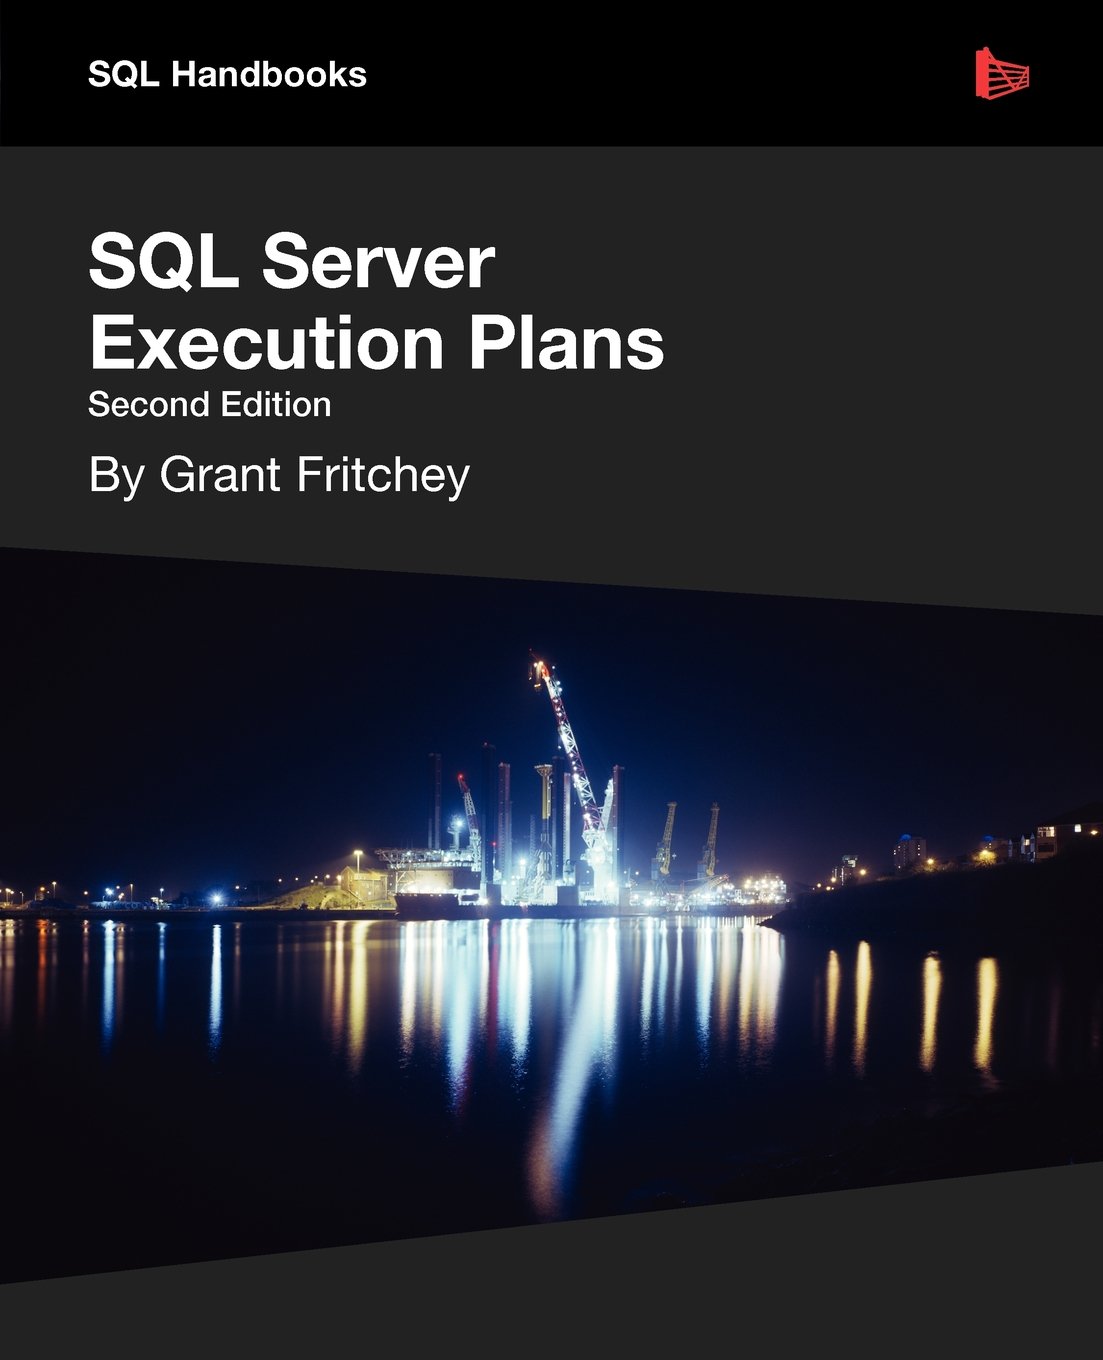 SQL Server Execution Plans Second Edition eBook Download